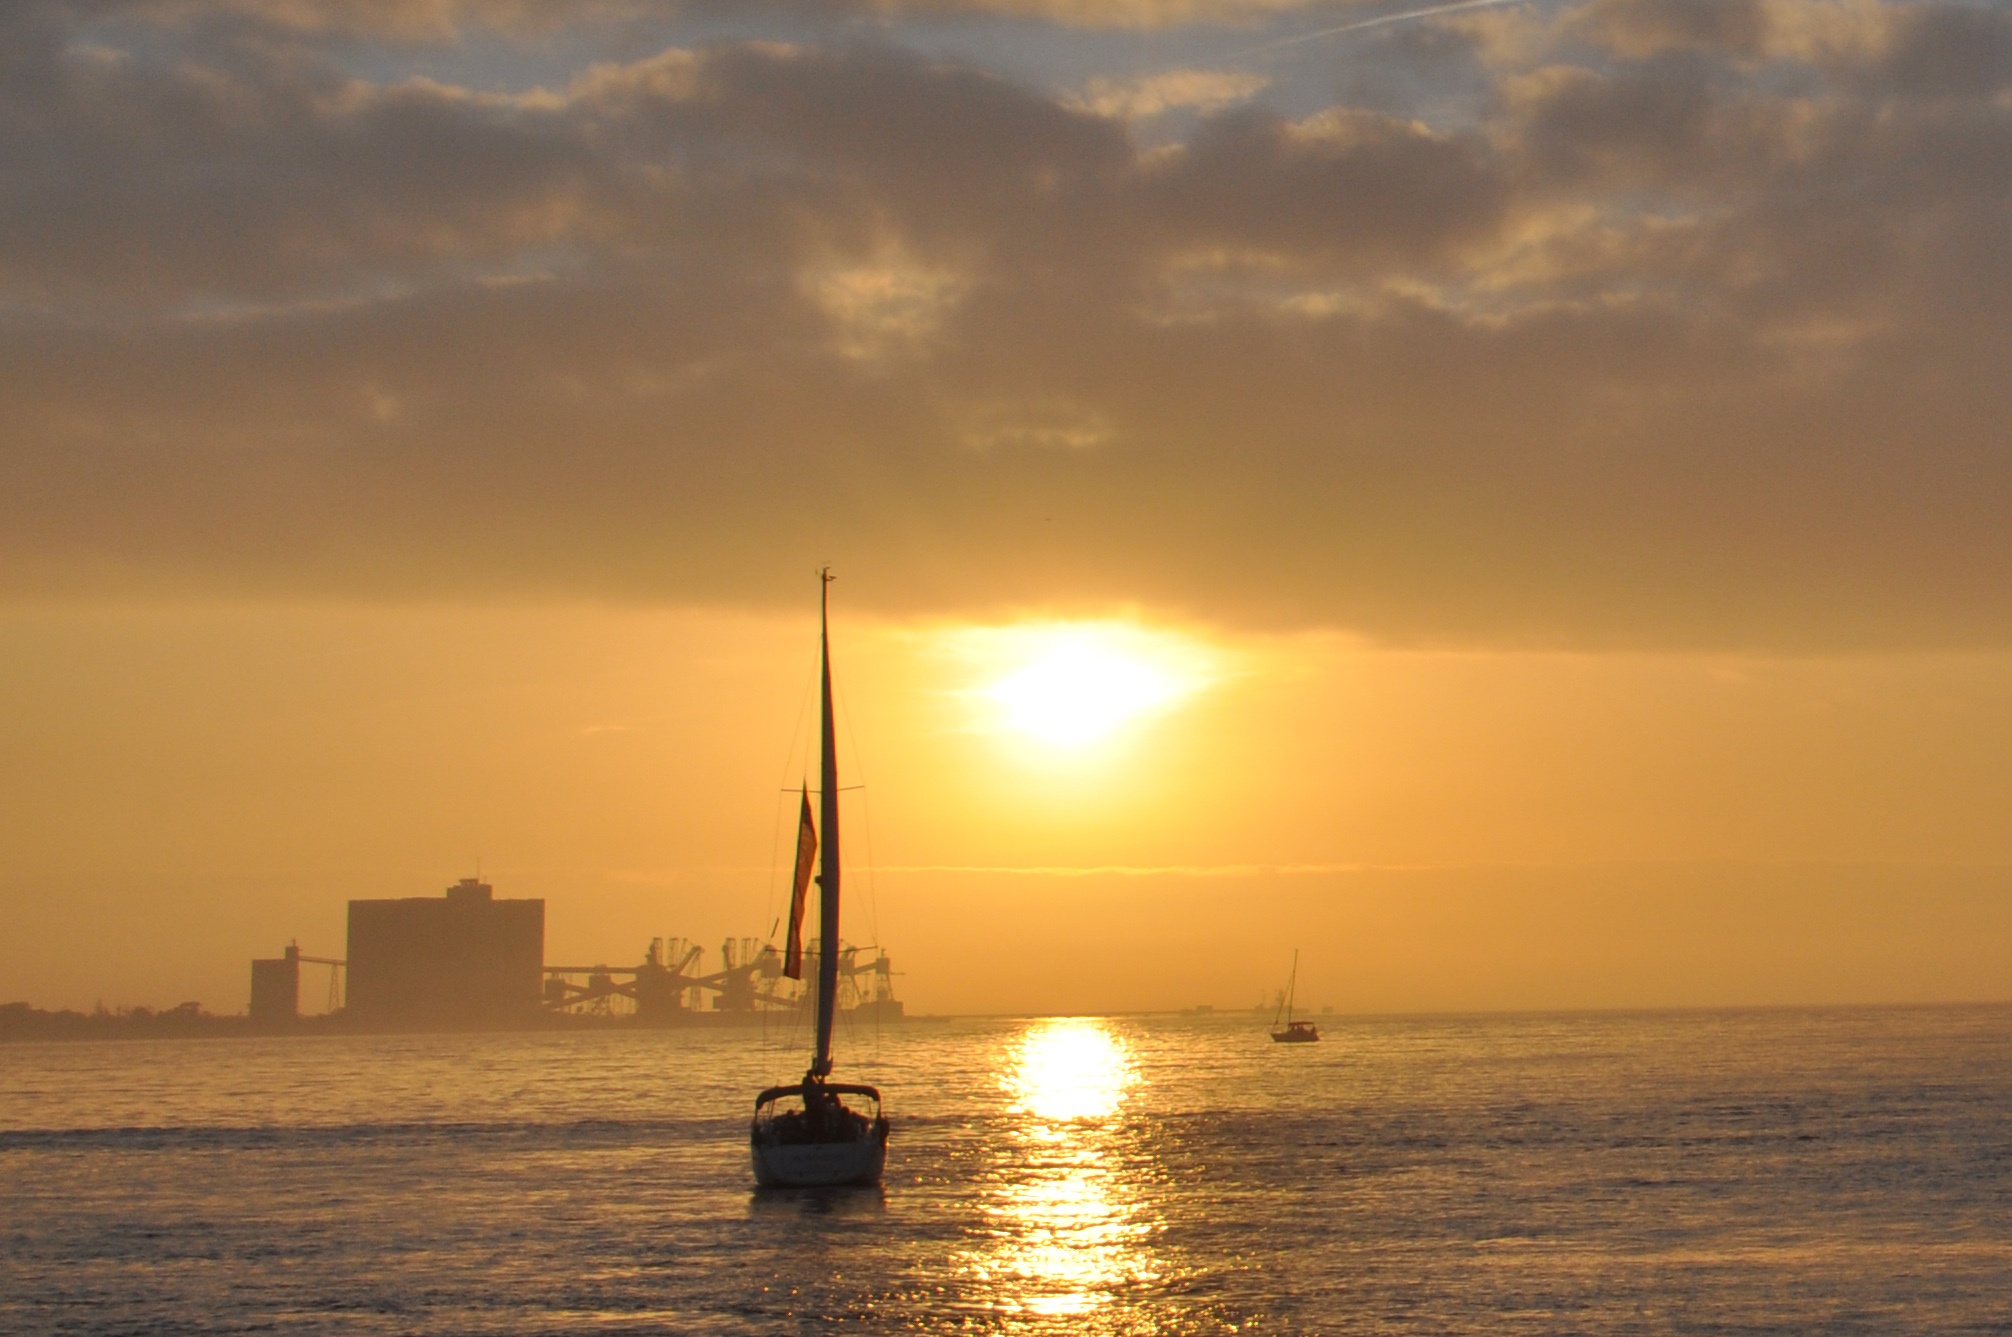 Sunset Sailing Tour to Discover Lisbon